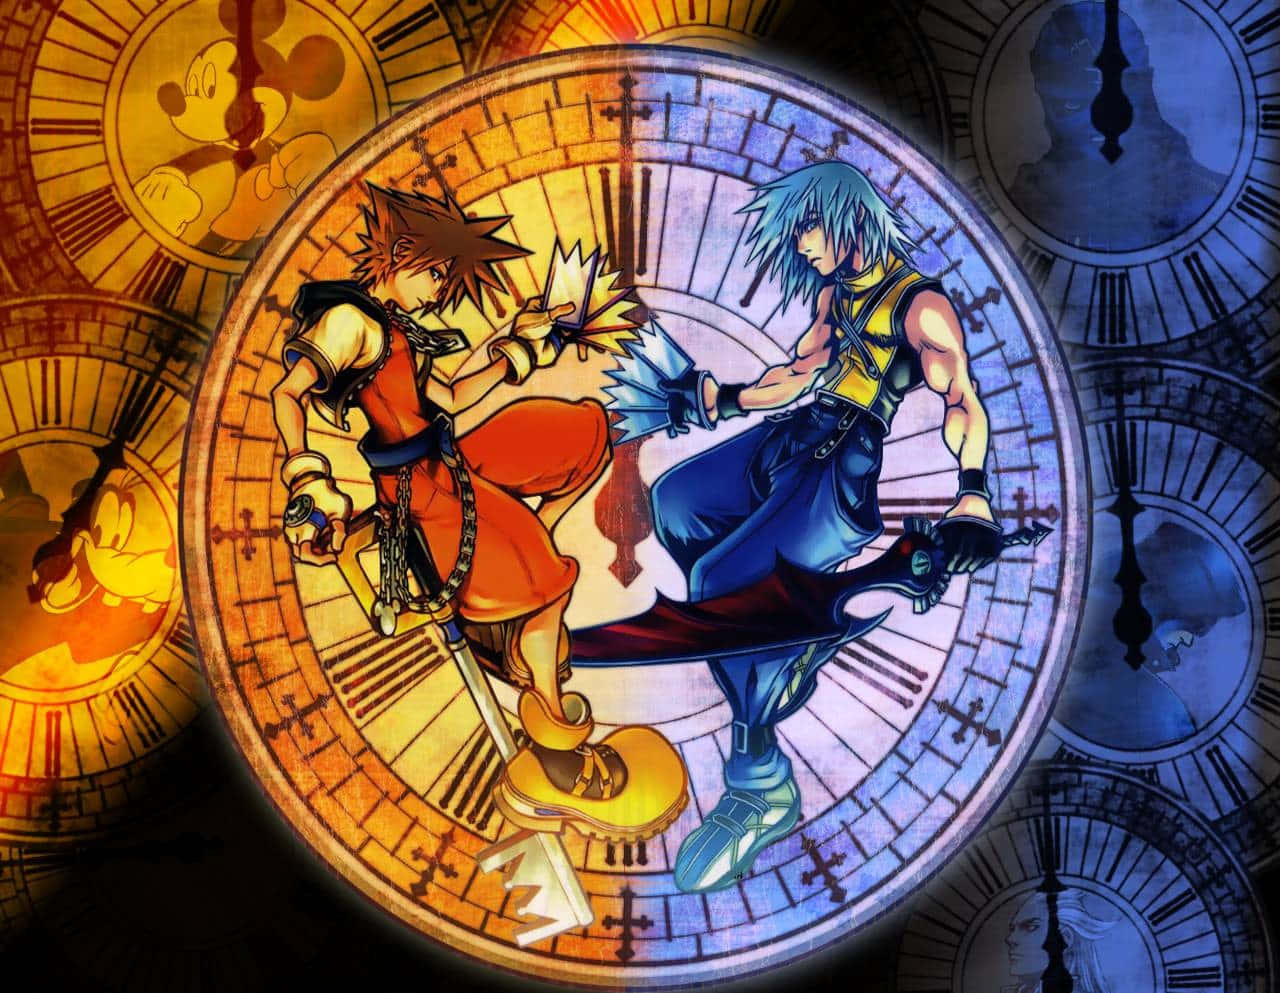 Riku wielding his Way to the Dawn Keyblade in Kingdom Hearts Wallpaper